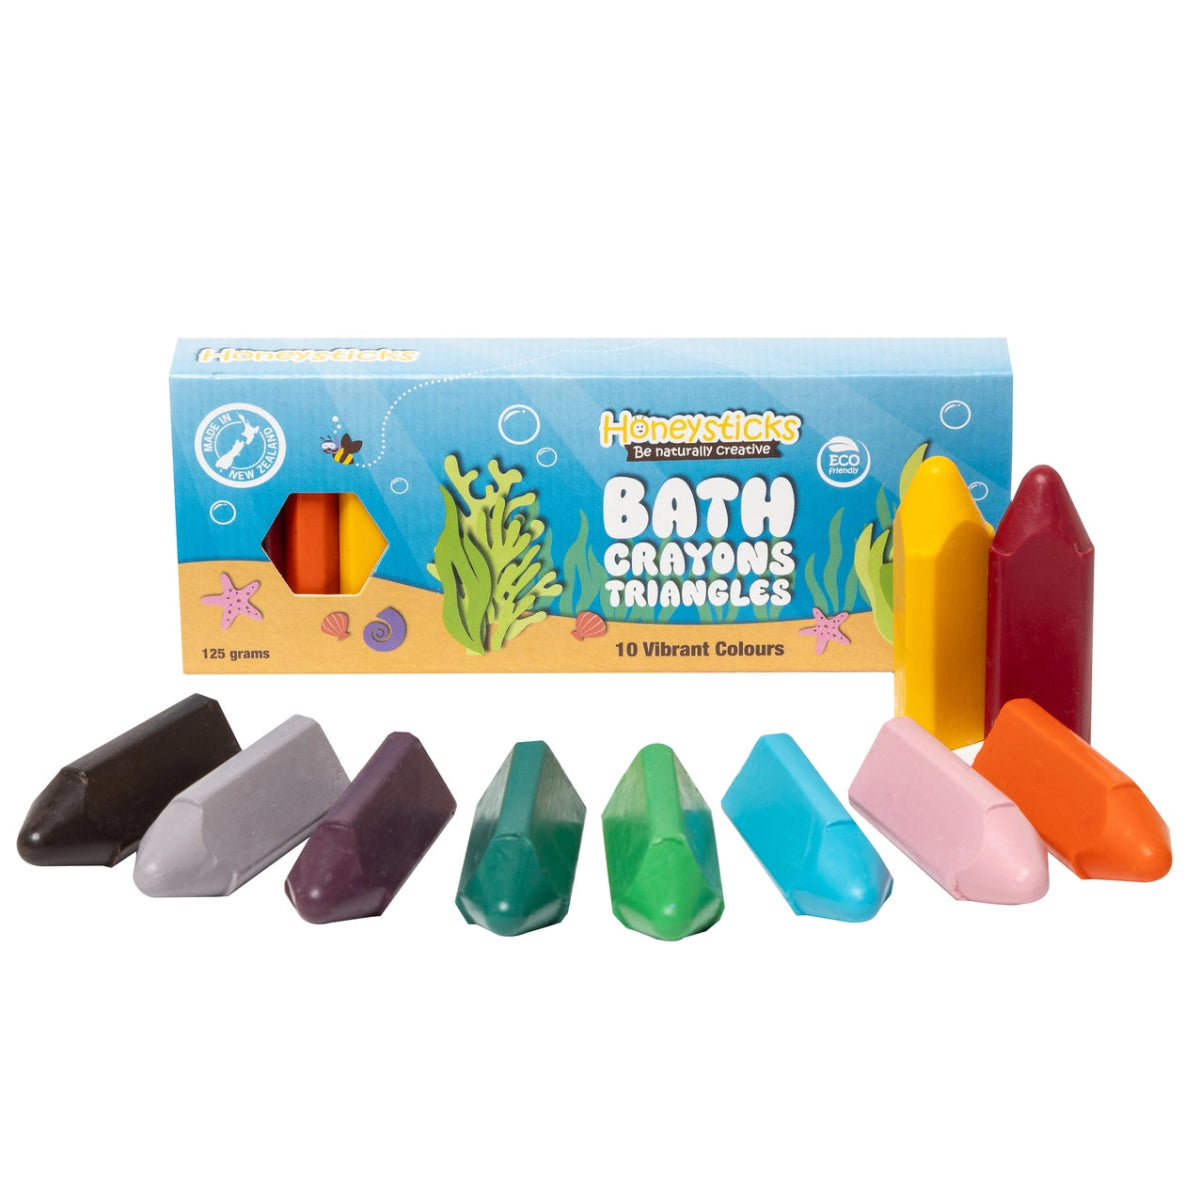 Honeysticks Bath Crayons - Triangles | Kids Bathtime-Honeysticks-Kids Art Supplies-Jade and May